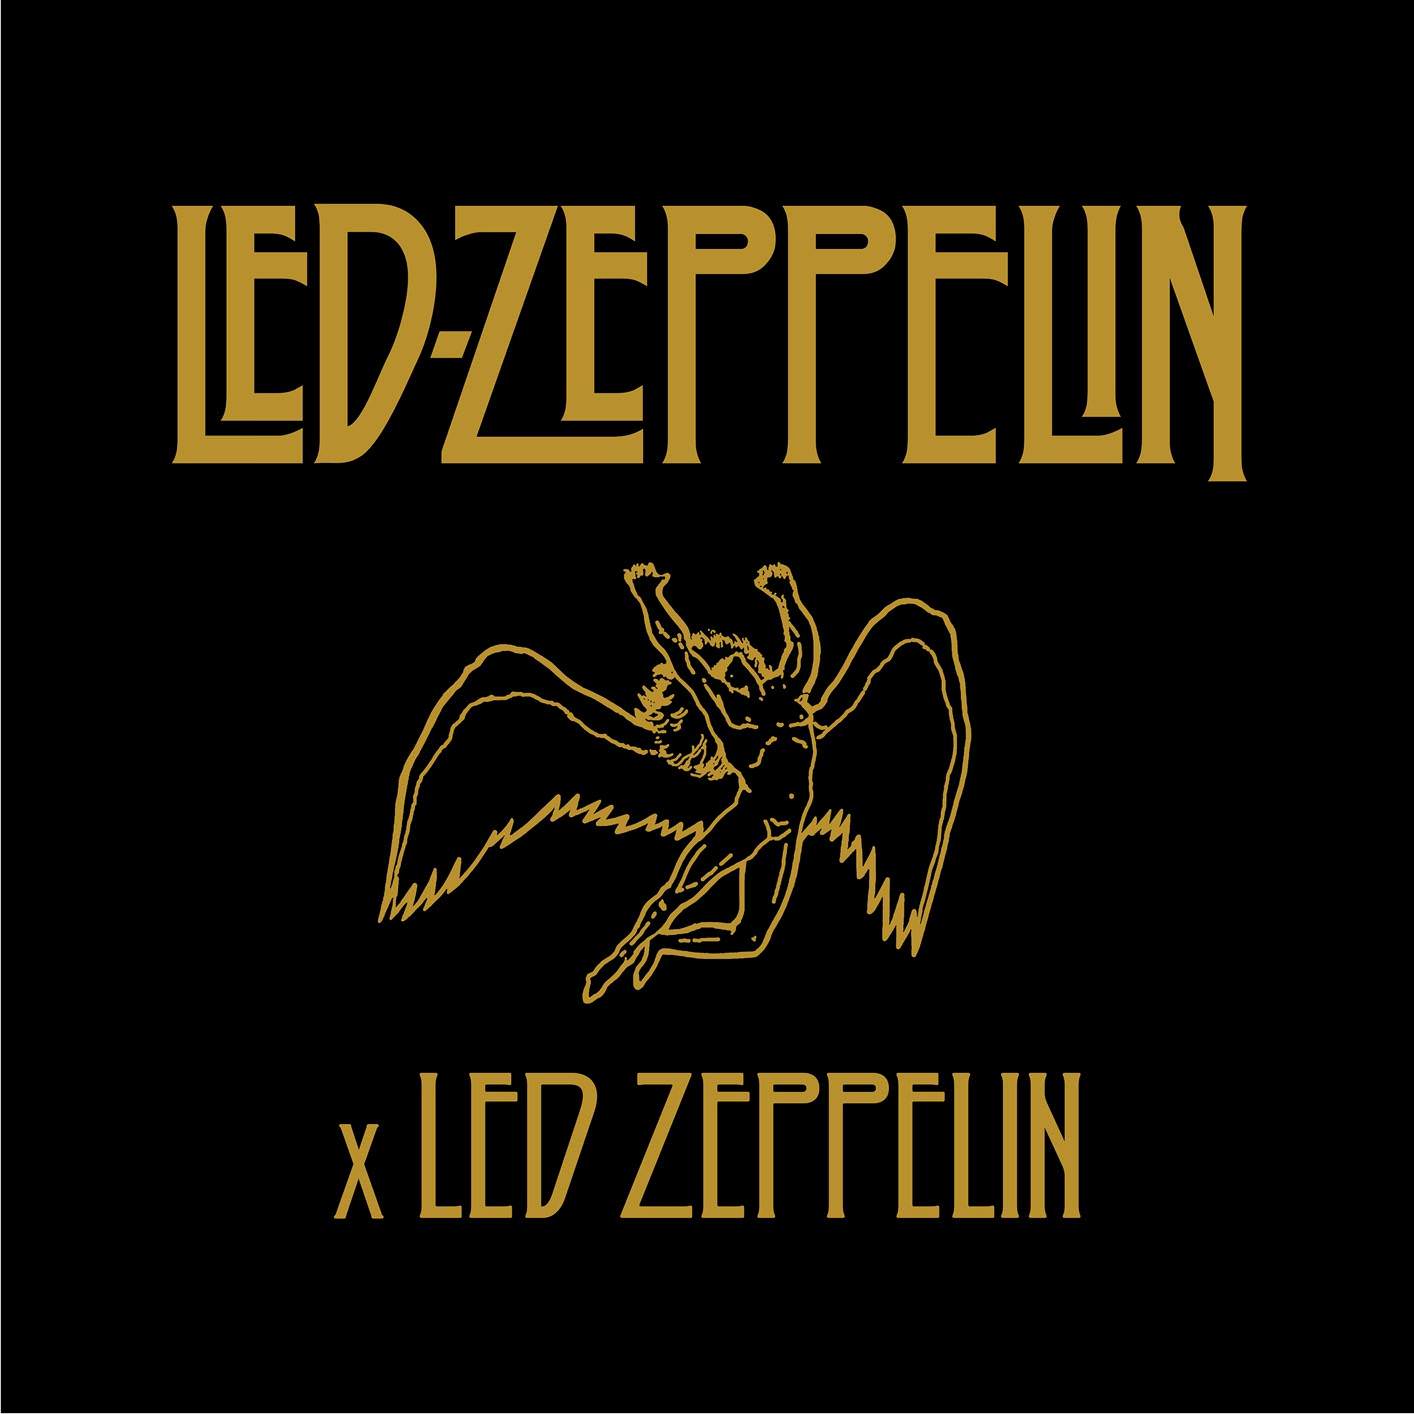 Led Zeppelin – Led Zeppelin x Led Zeppelin (Remastered) (2018) [FLAC 24bit/96kHz]